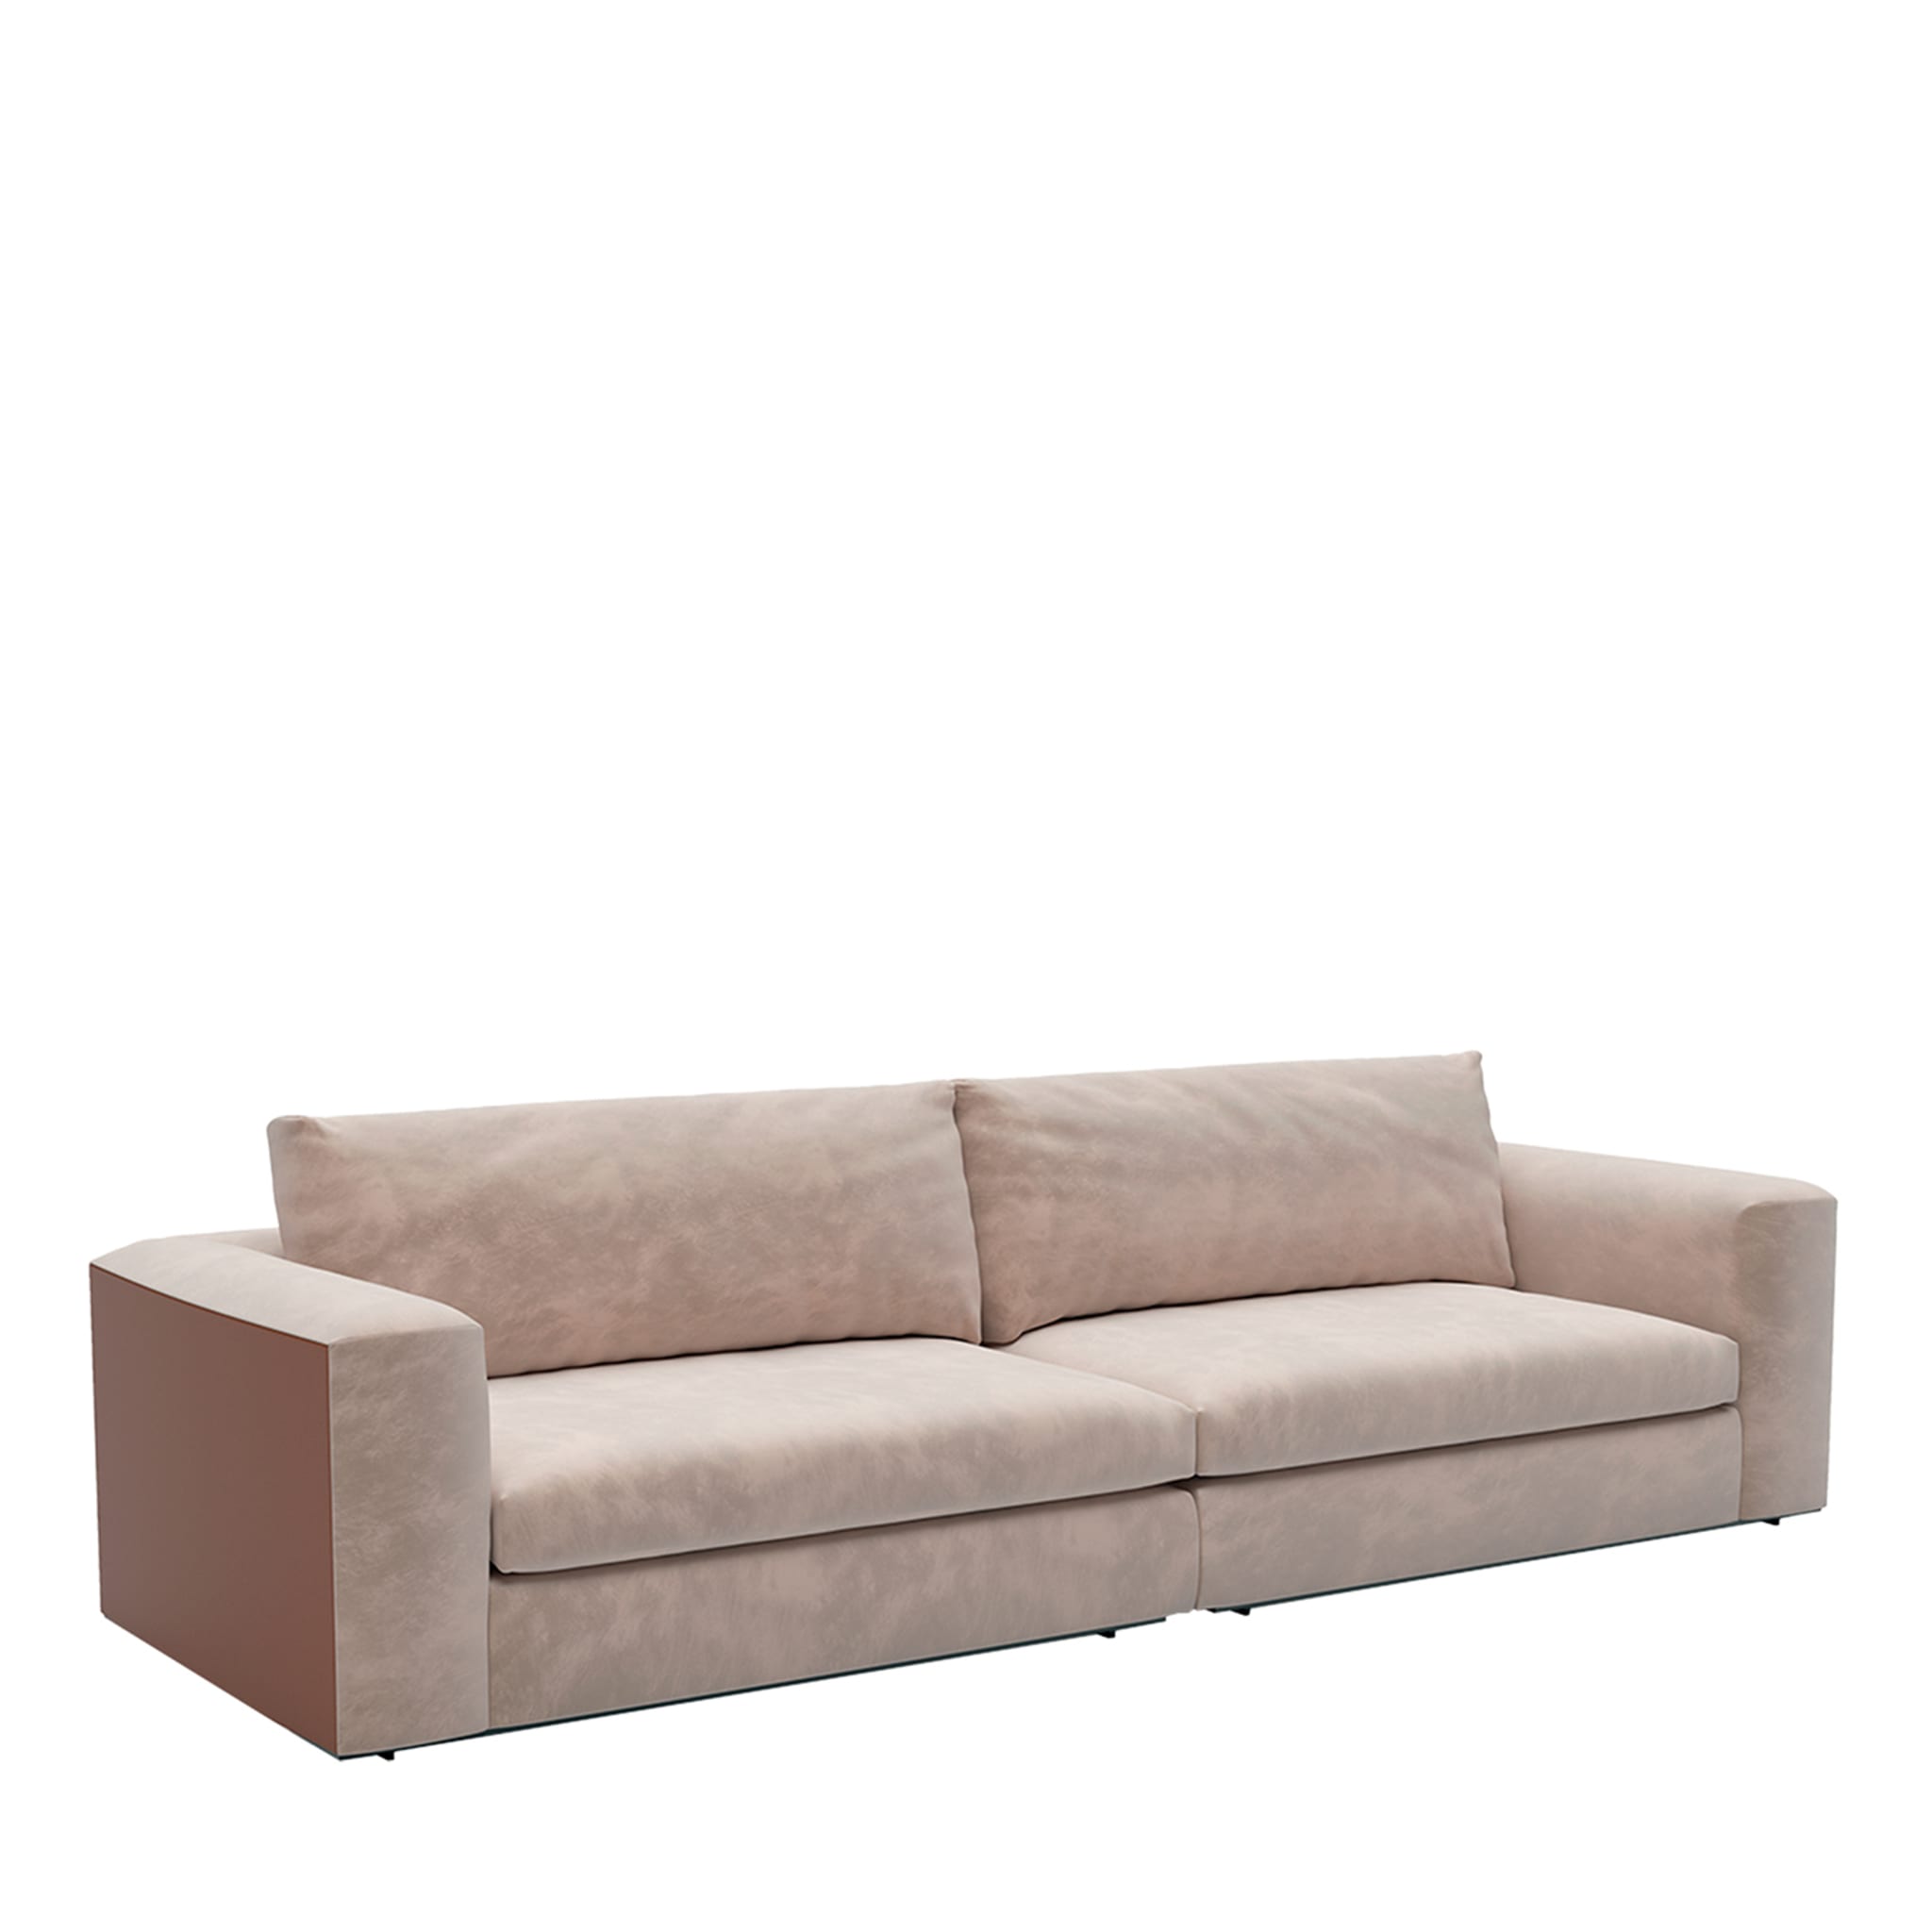 Cosily Modular Sofa #3 - Main view